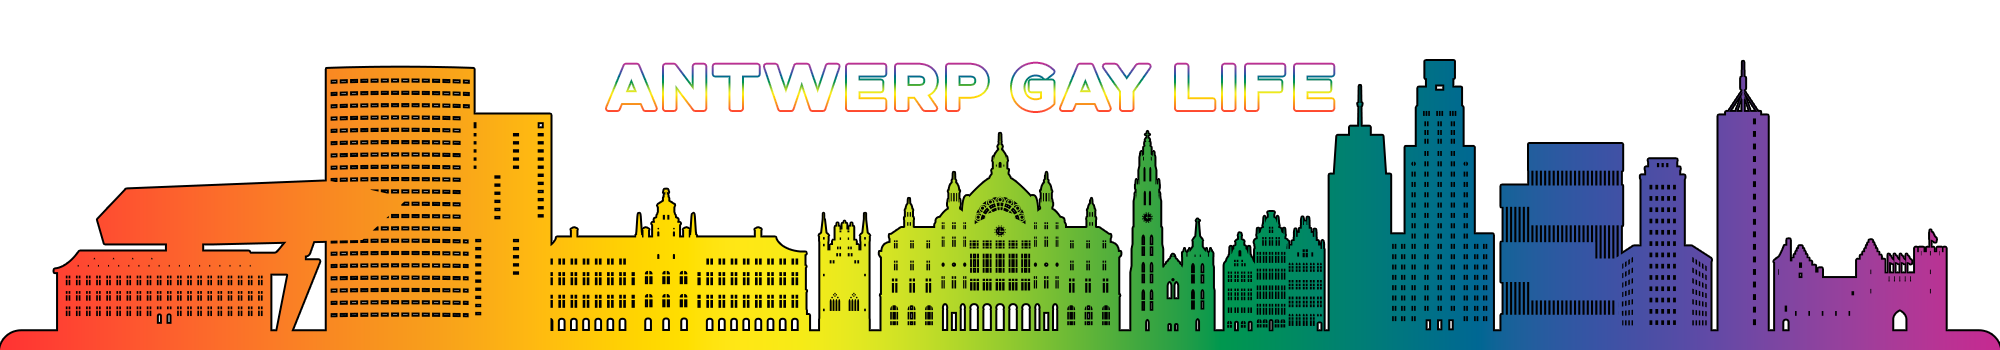 Antwerp Gay Life - Explore Gay Life in Antwerp - Your Ultimate Guide